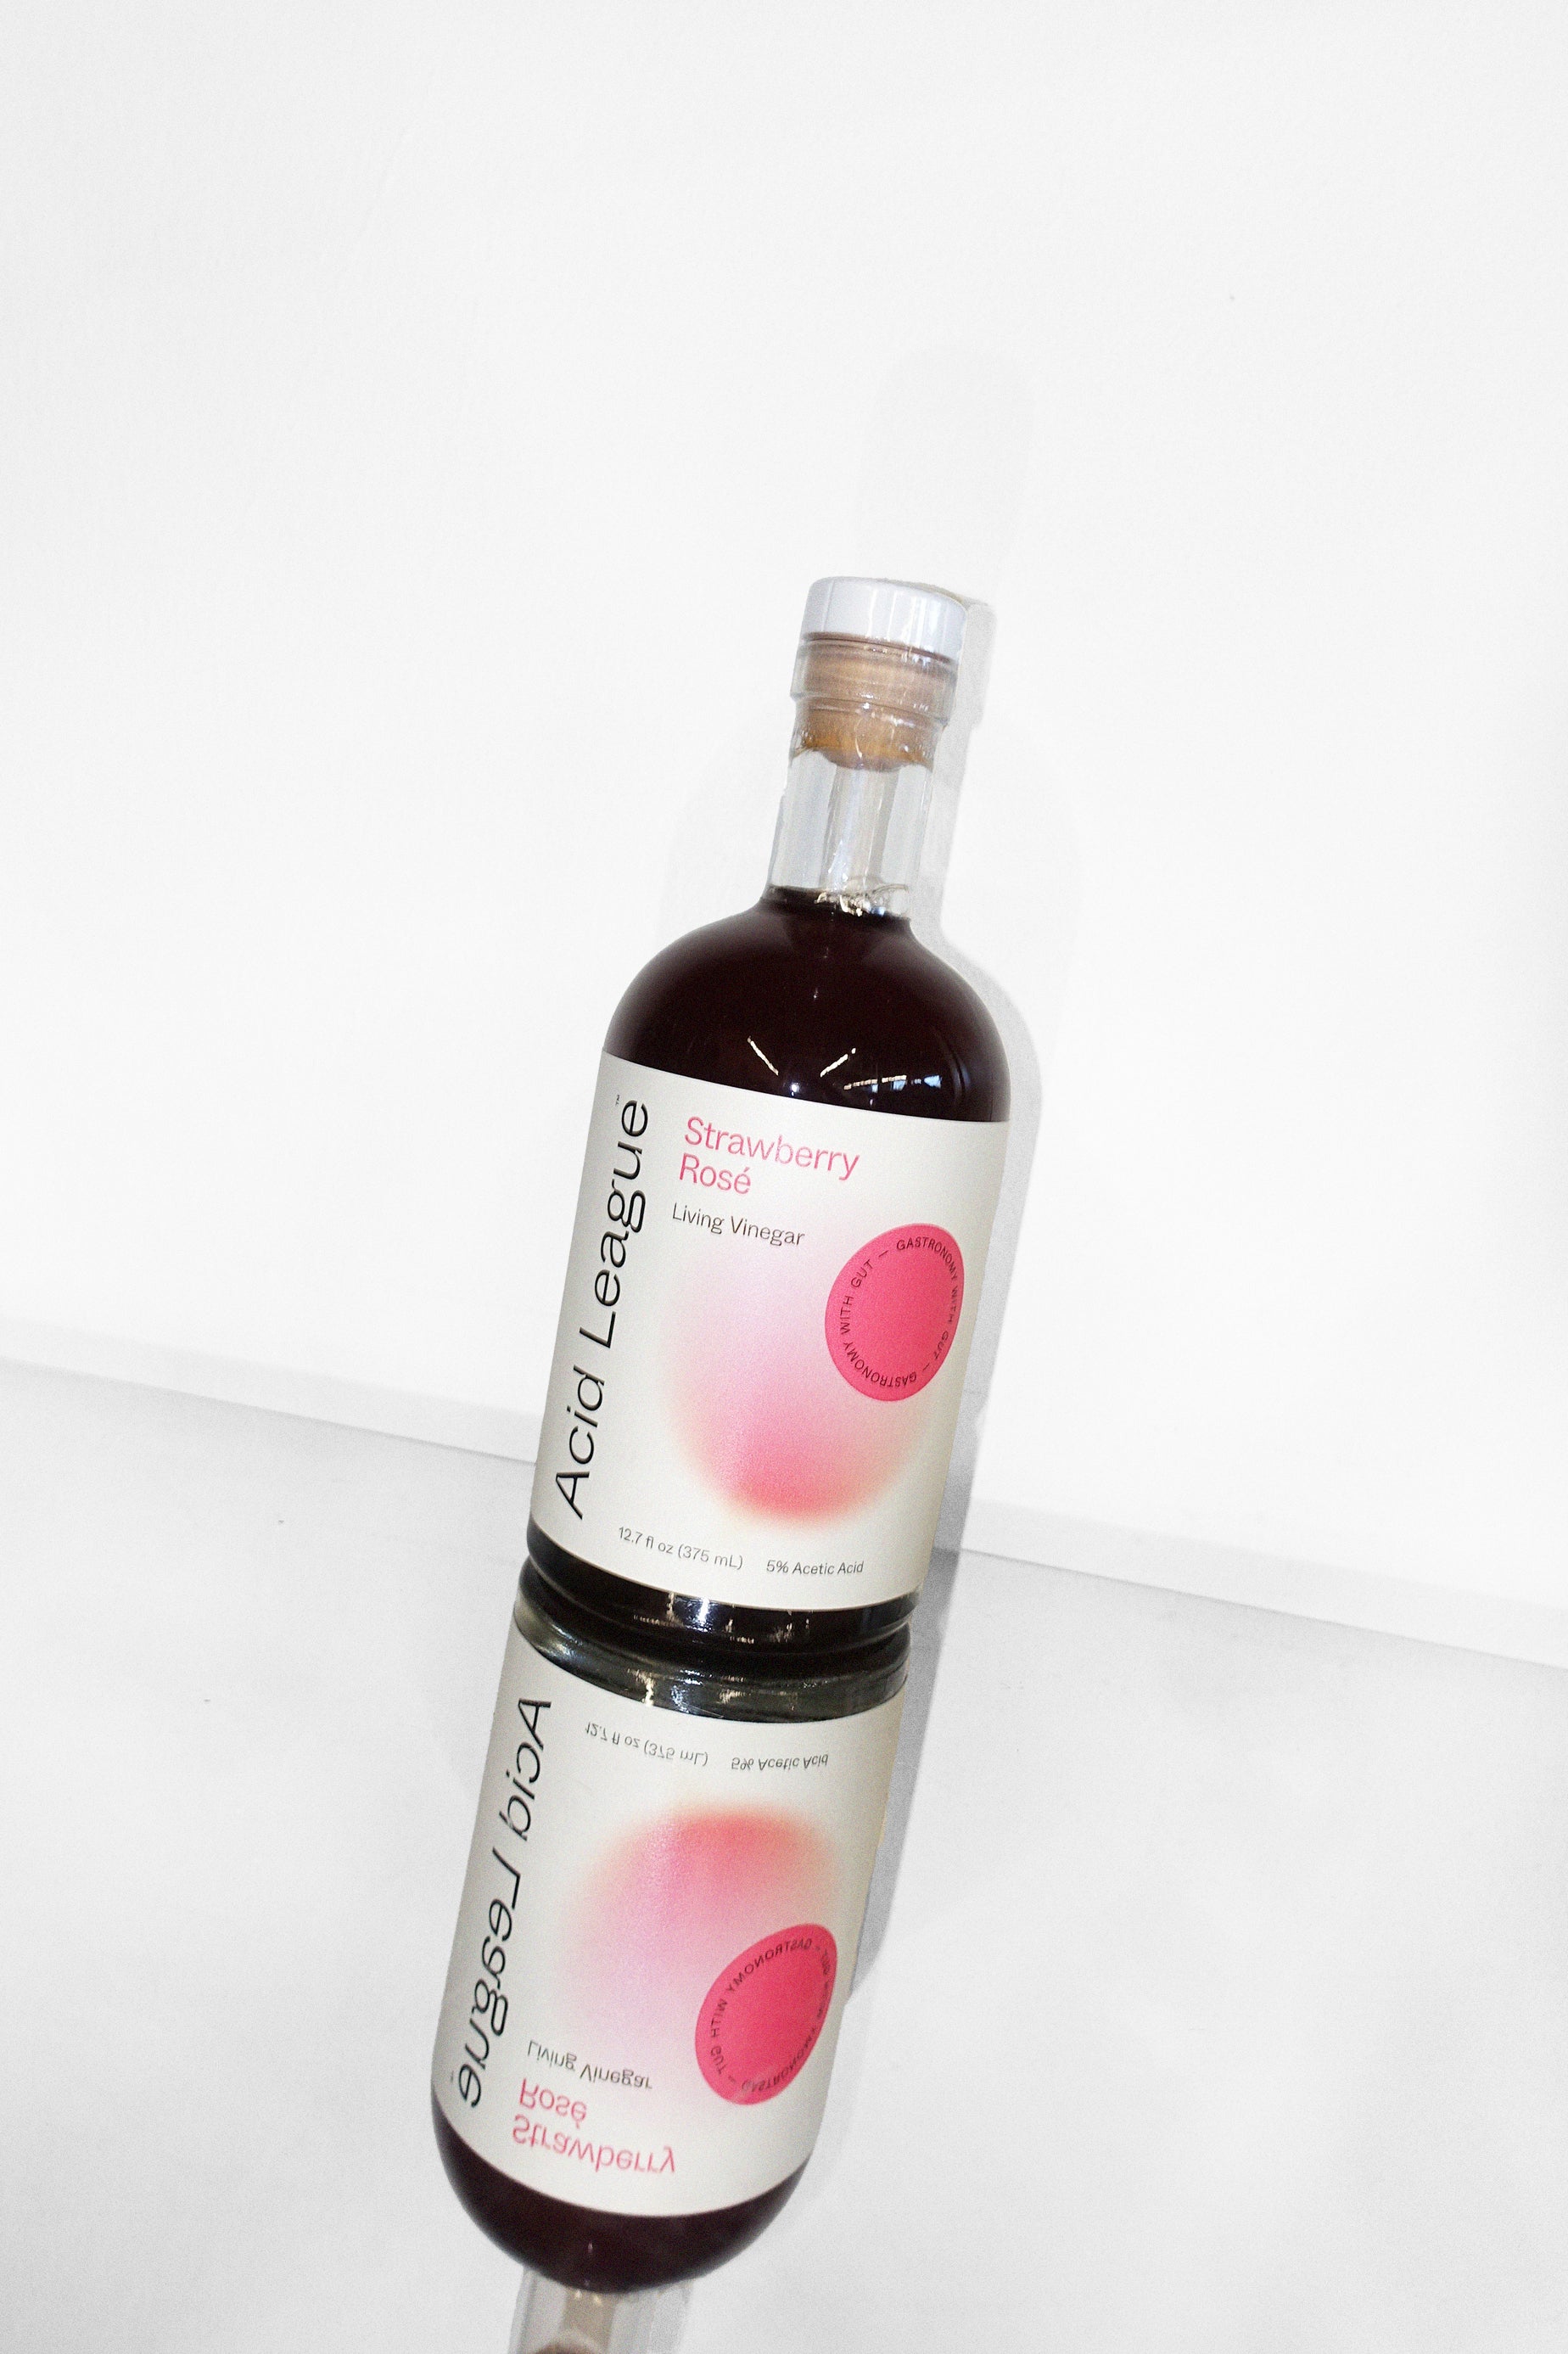 Strawberry Rosé Living Vinegar